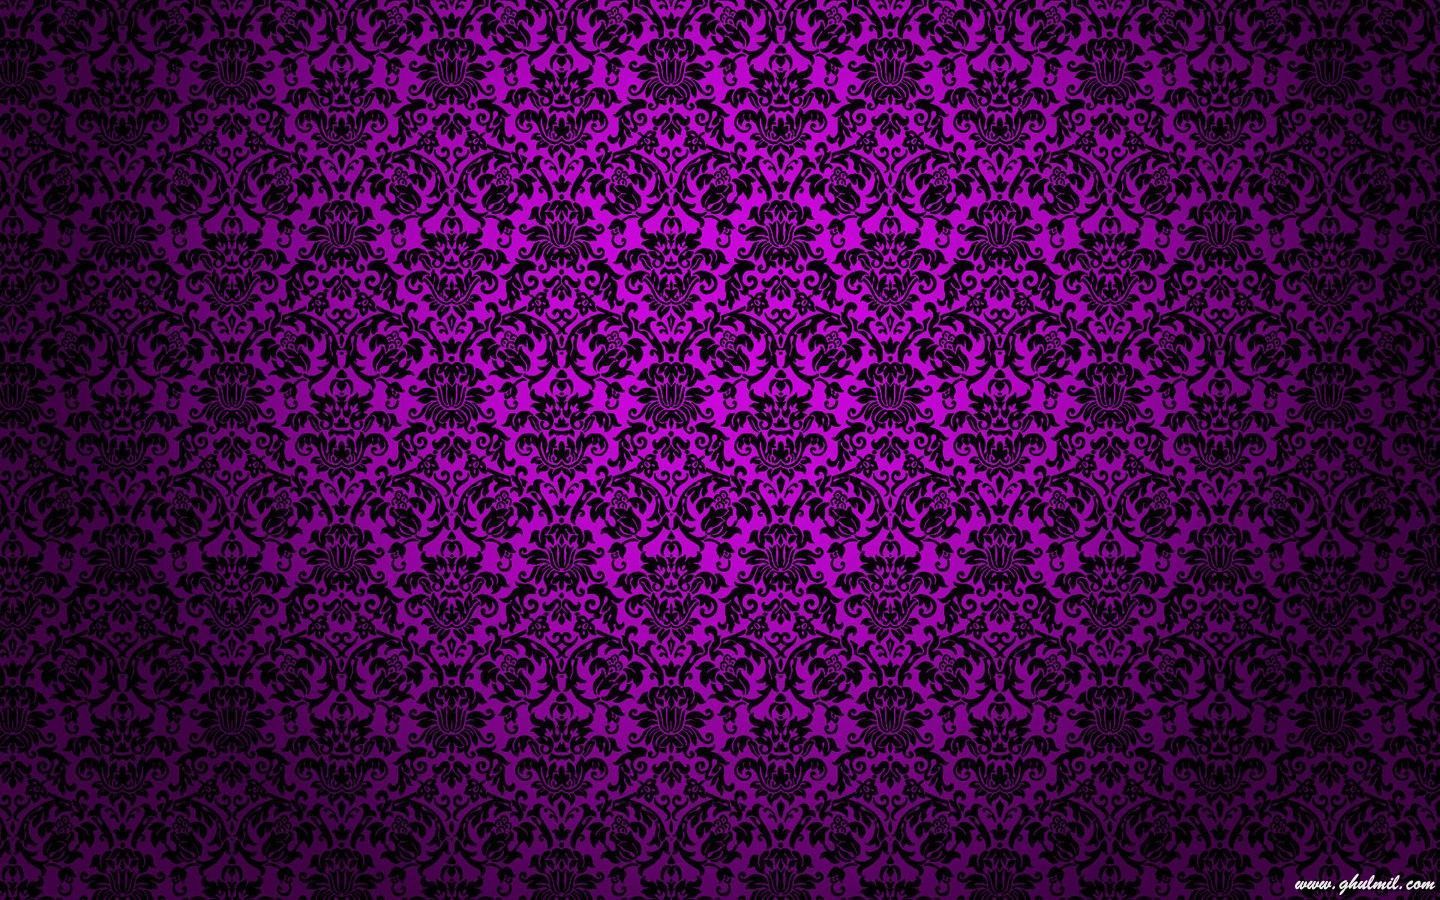 Modern Abstract Geometric Lines Purple Wallpaper 3D Wallpaper Home  Decoration Living Room Bedroom Decoration Mural Wallpaper  3D250cmx175cm984x689inch  Amazoncouk DIY  Tools